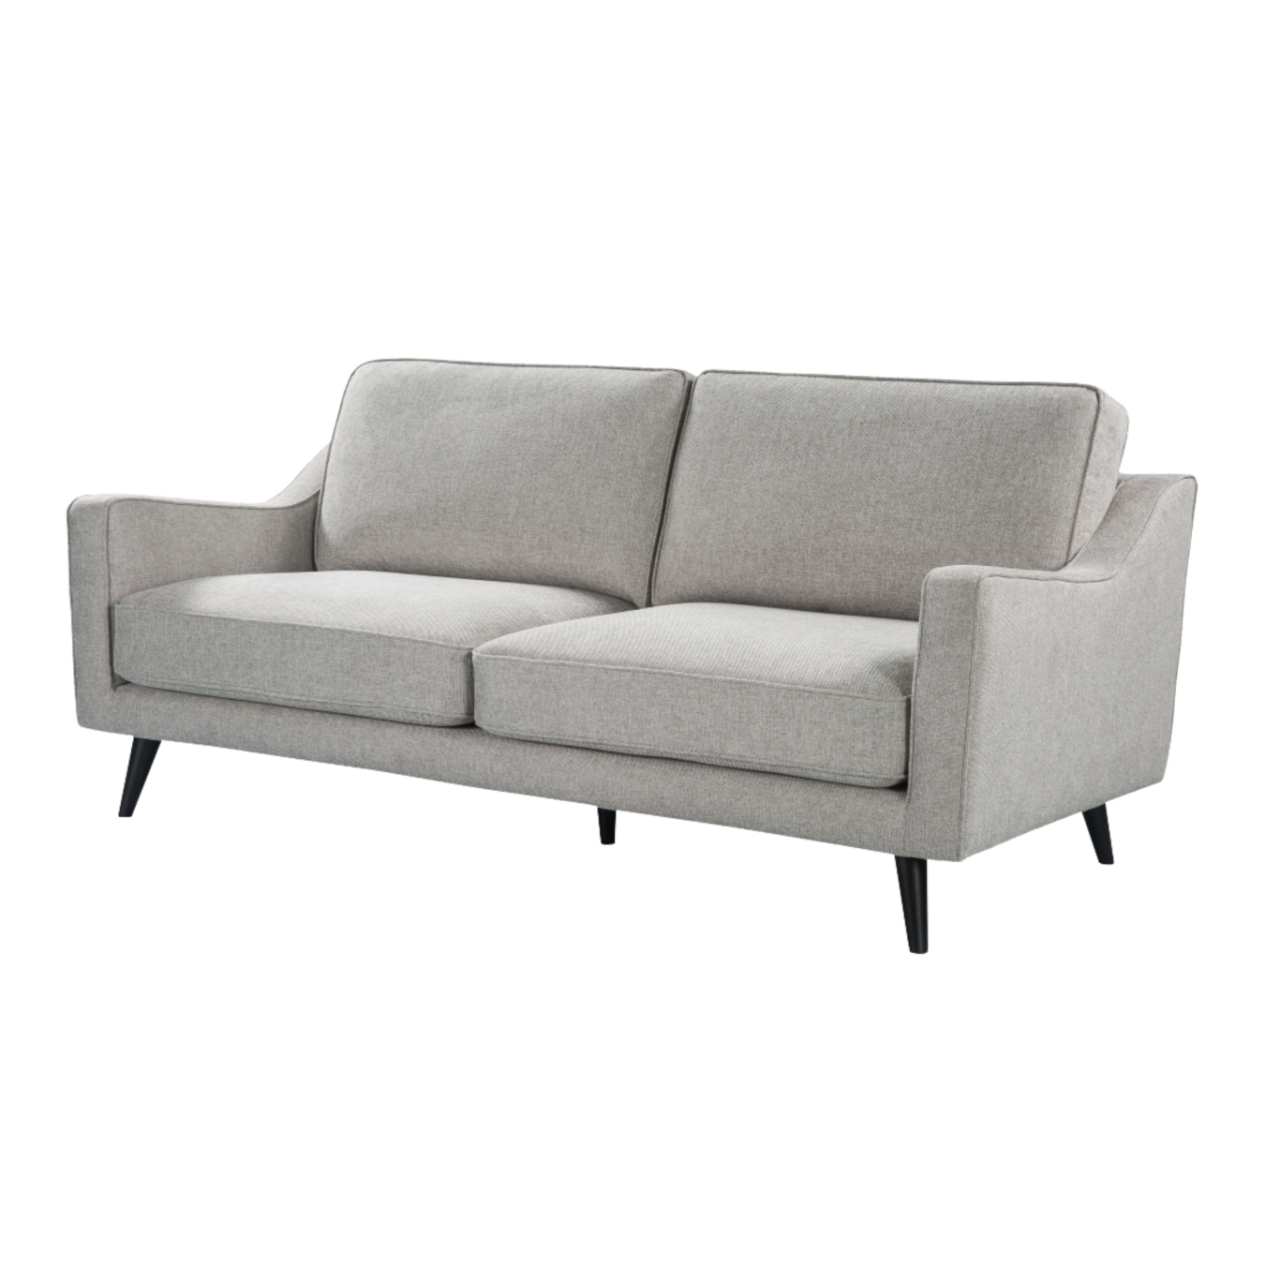 simple, modern upholstered 2.5 seater sofa in stone linen